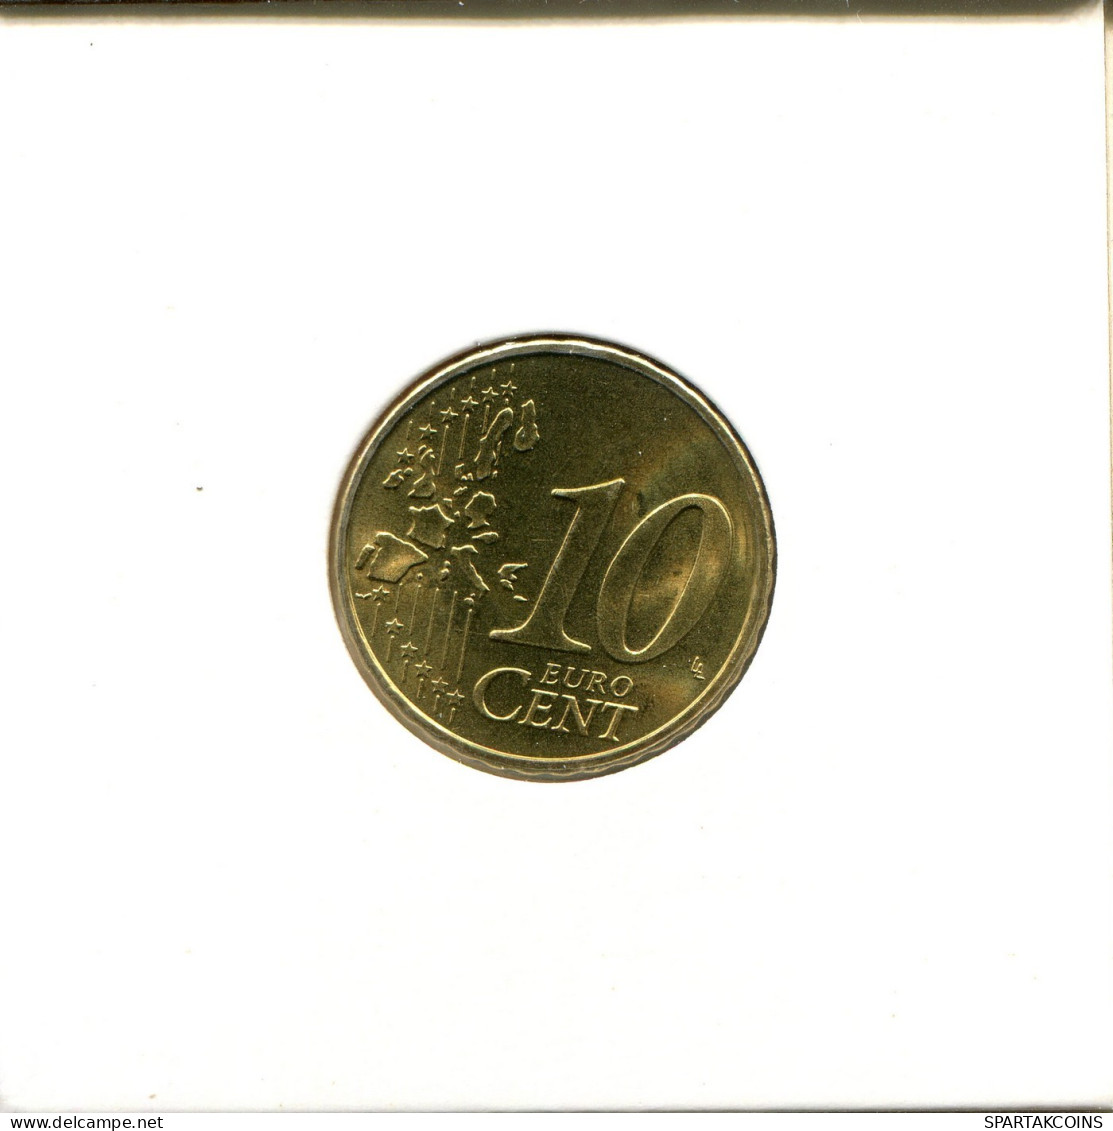 10 EURO CENTS 1999 NETHERLANDS Coin #EU273.U.A - Niederlande